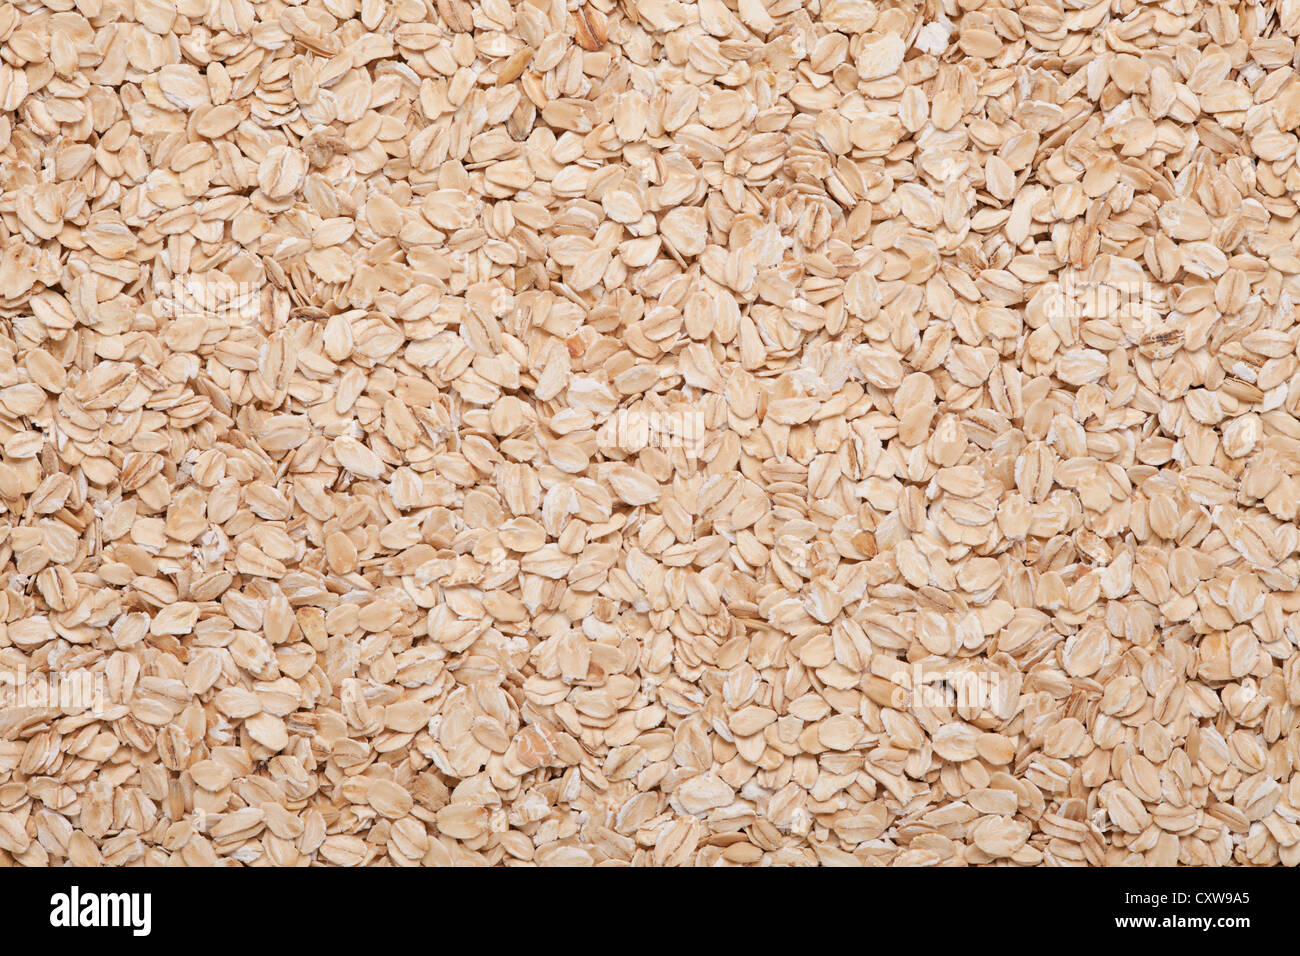 Antecedentes de avena grano de color marrón claro, de textura de alimentos Foto de stock